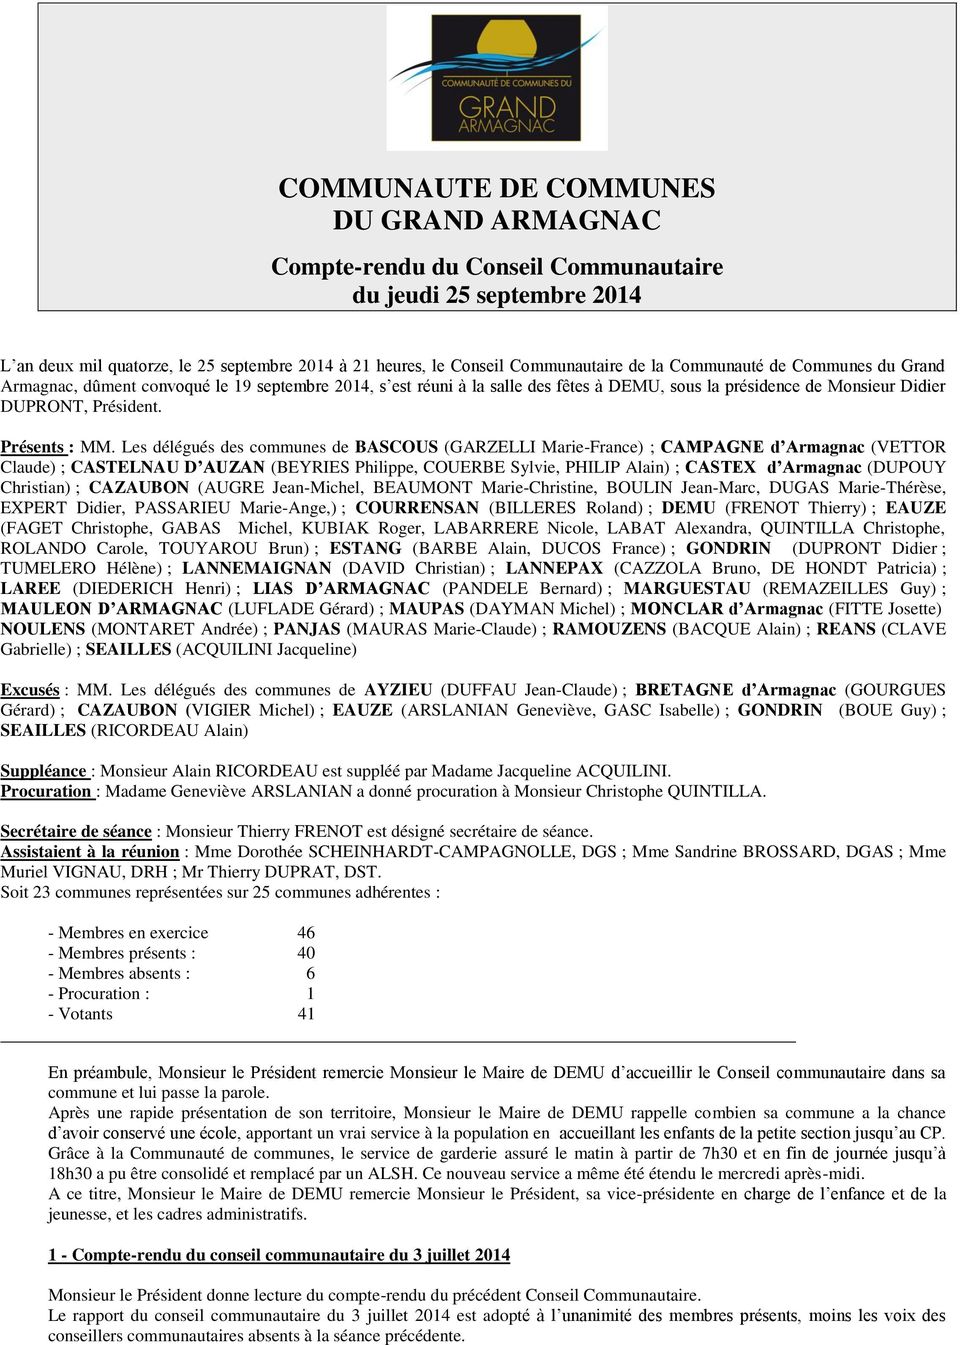 COMMUNAUTE DE COMMUNES DU GRAND ARMAGNAC - PDF Free Download